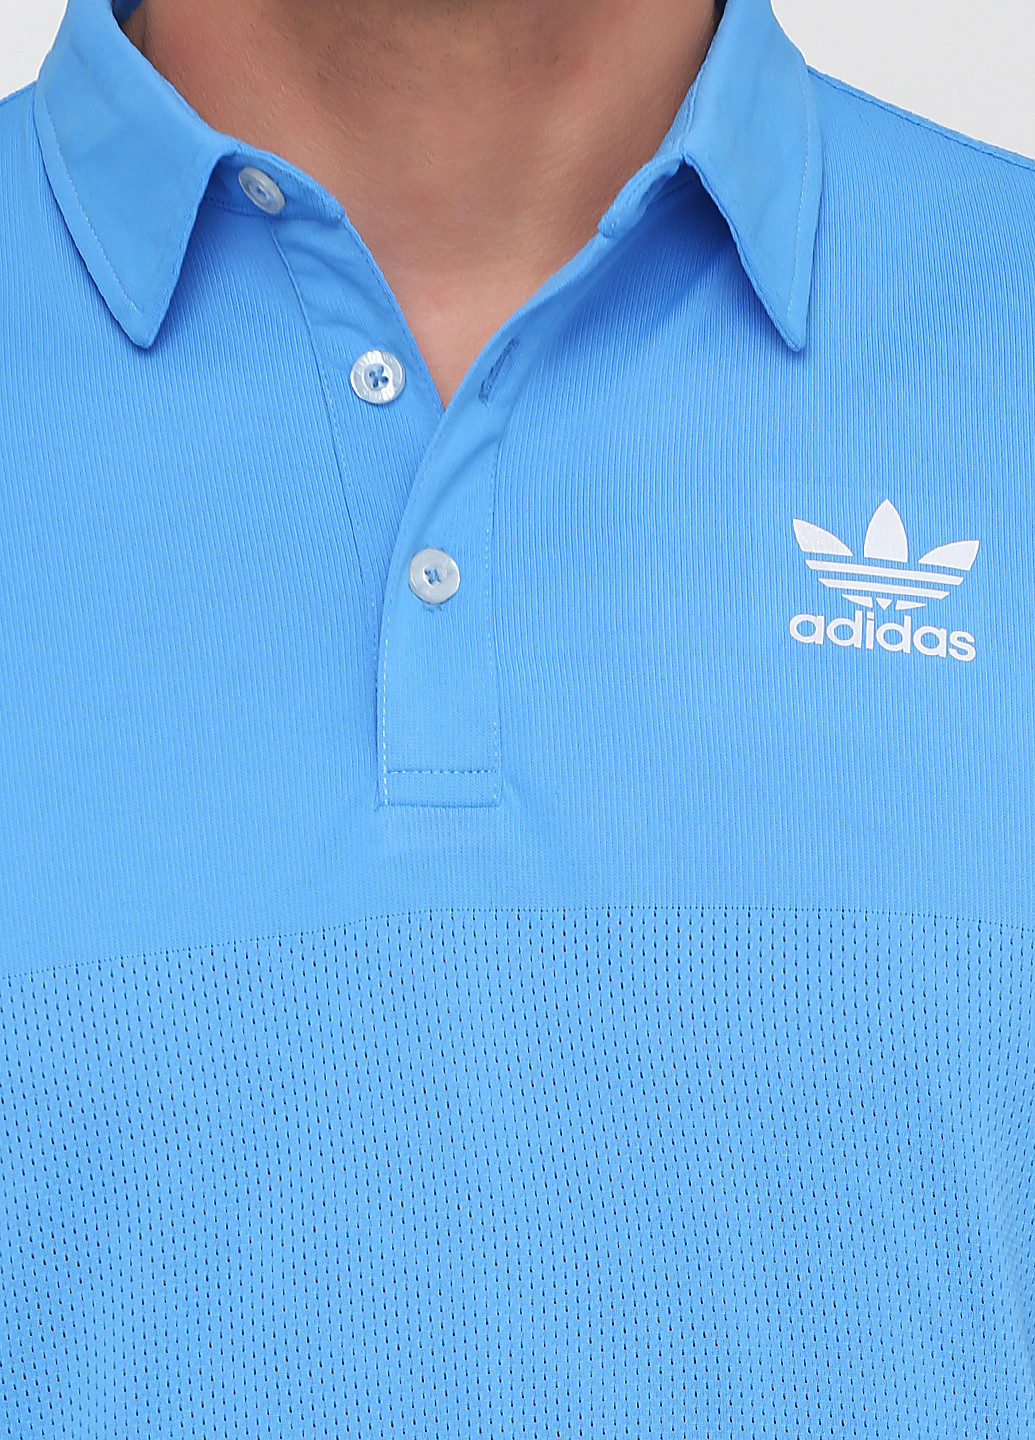 Голубой футболка-поло для мужчин adidas с логотипом